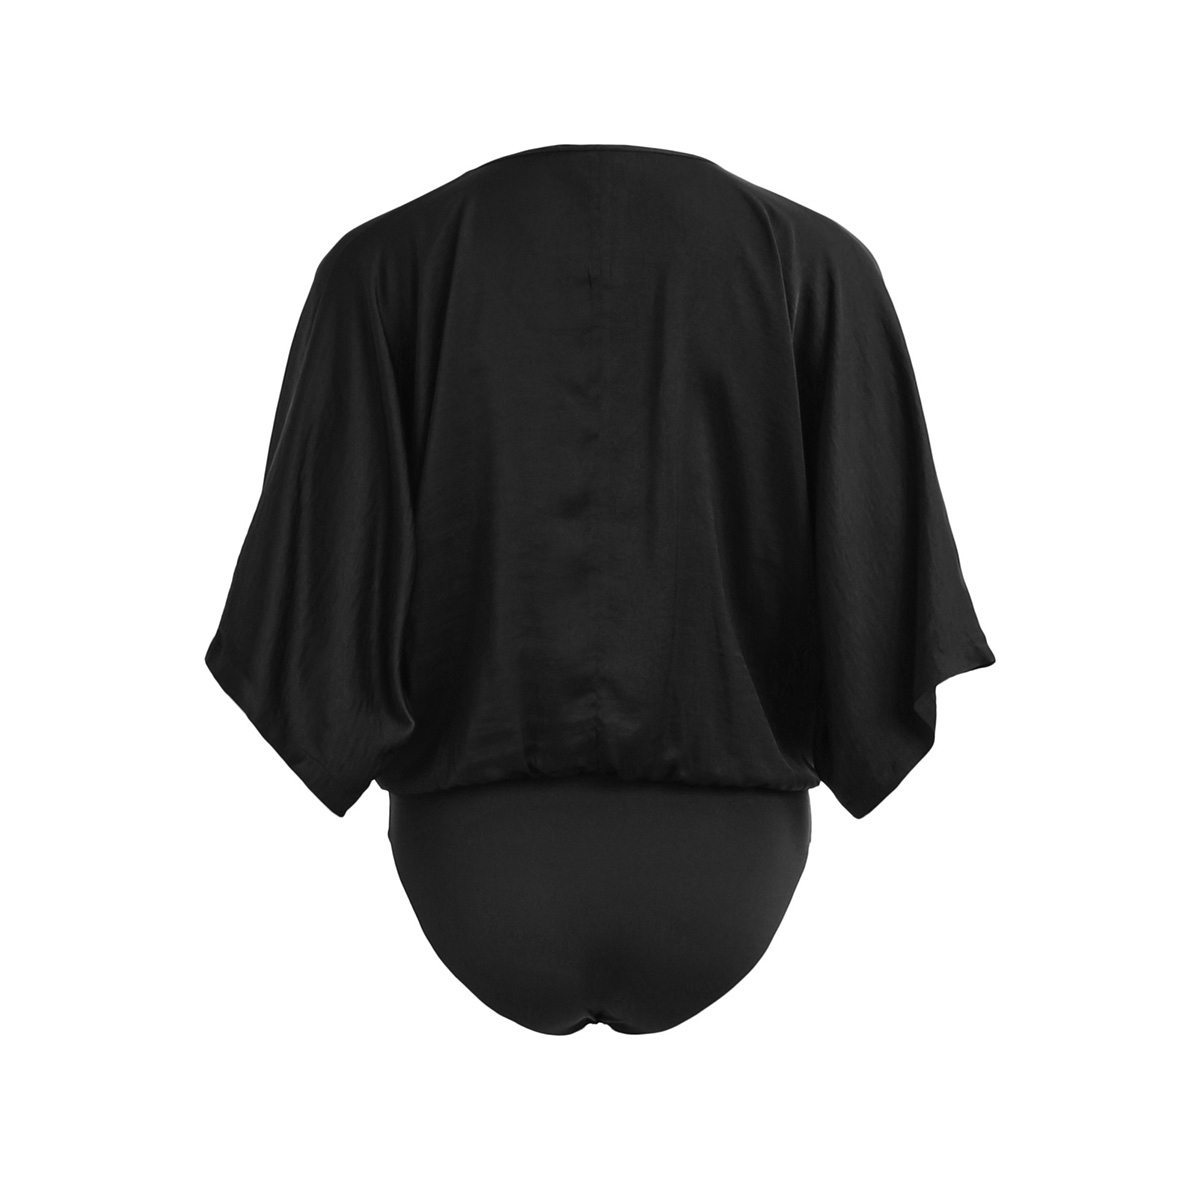 vicava 3/4 bodystocking 14050871 vila blouse black